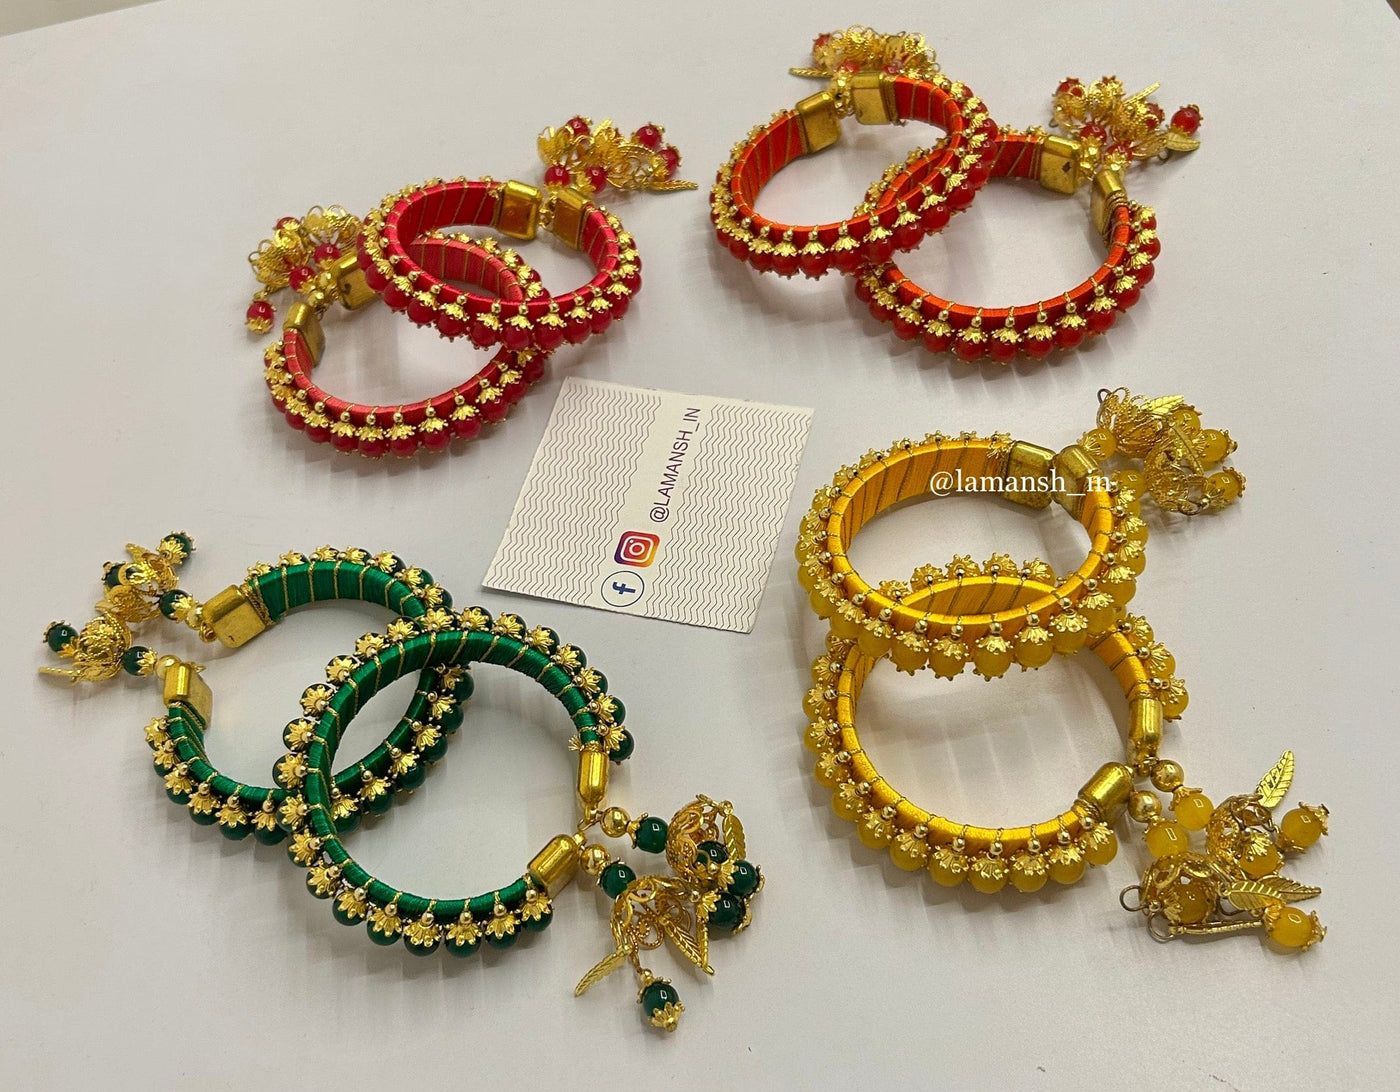 120 Rs pair on buying minimum 50 pairs | Whatsapp at 8619550223 kundan thread bangles LAMANSH Designer moti Bangles for giveaways in haldi and Mehendi ceremony / Favours for bridesmaids